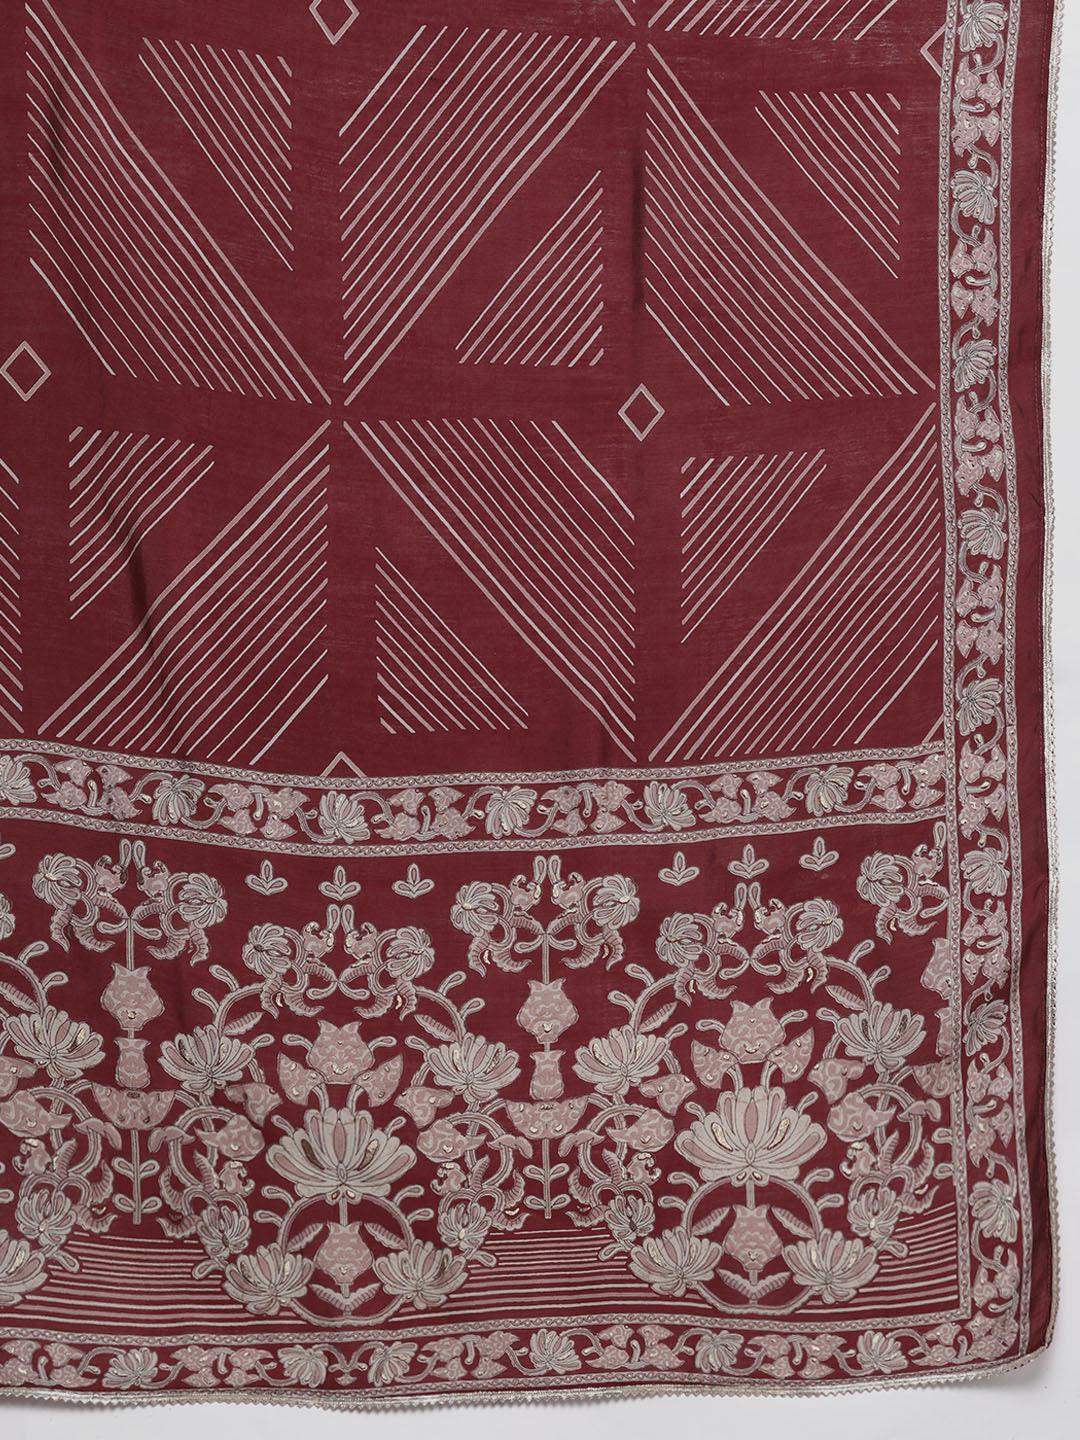 Plus Size Red Printed Silk Blend Straight Kurta With Palazzos & Dupatta - Libas